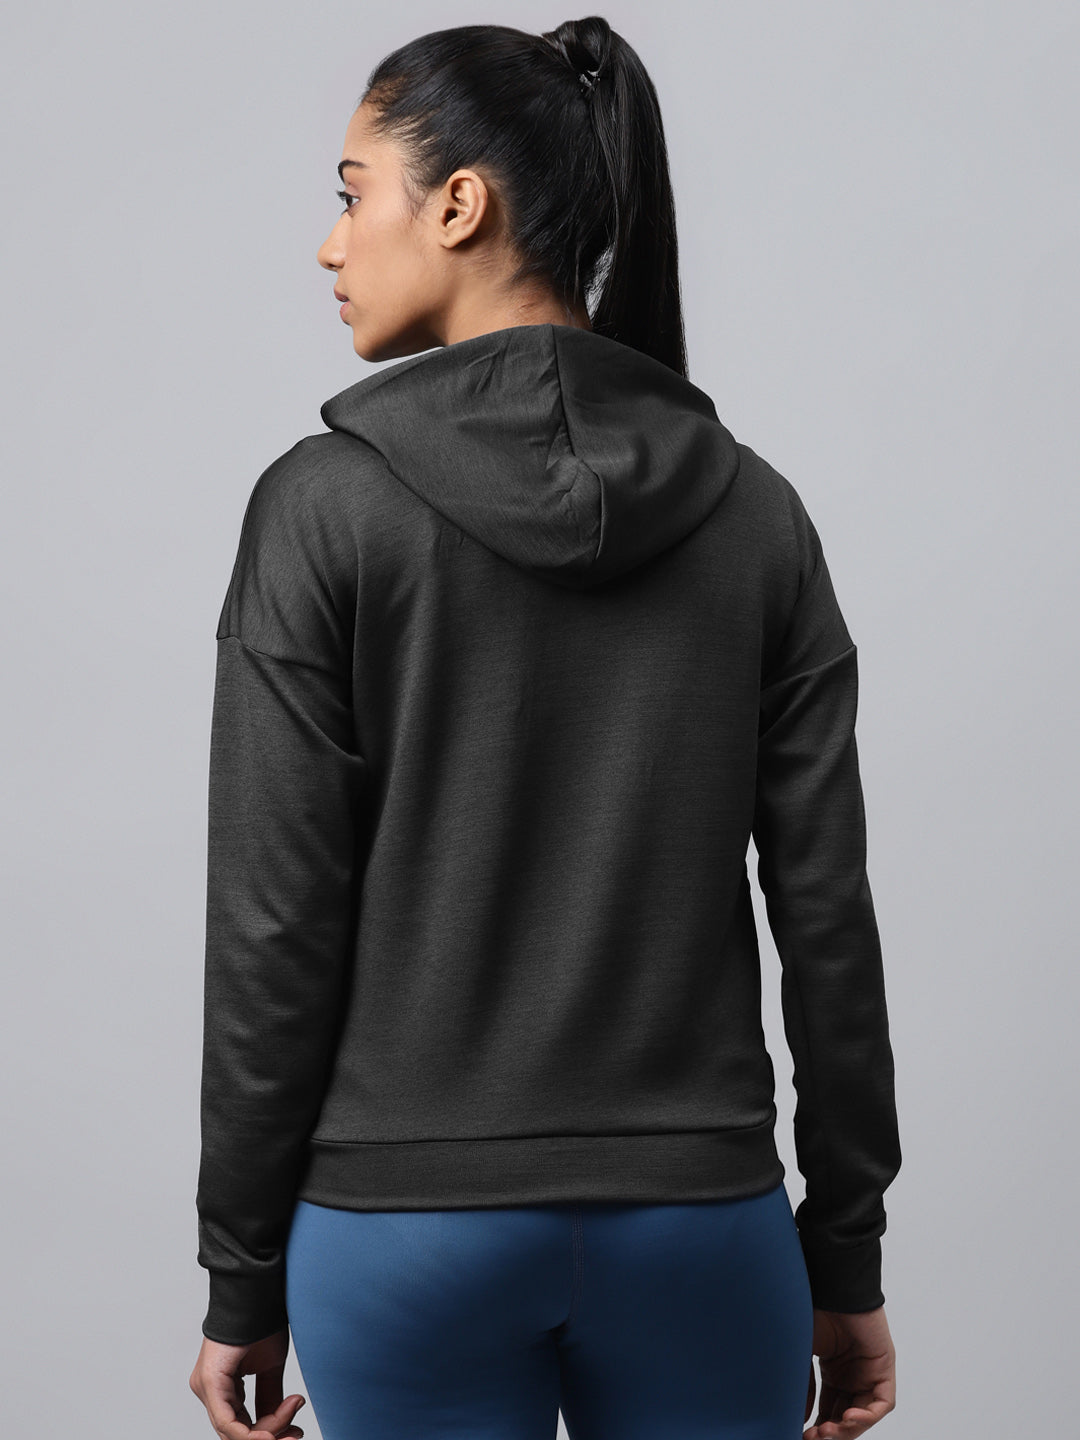 Alcis Women Charcoal Grey Self-Design Hooded Training Jacket